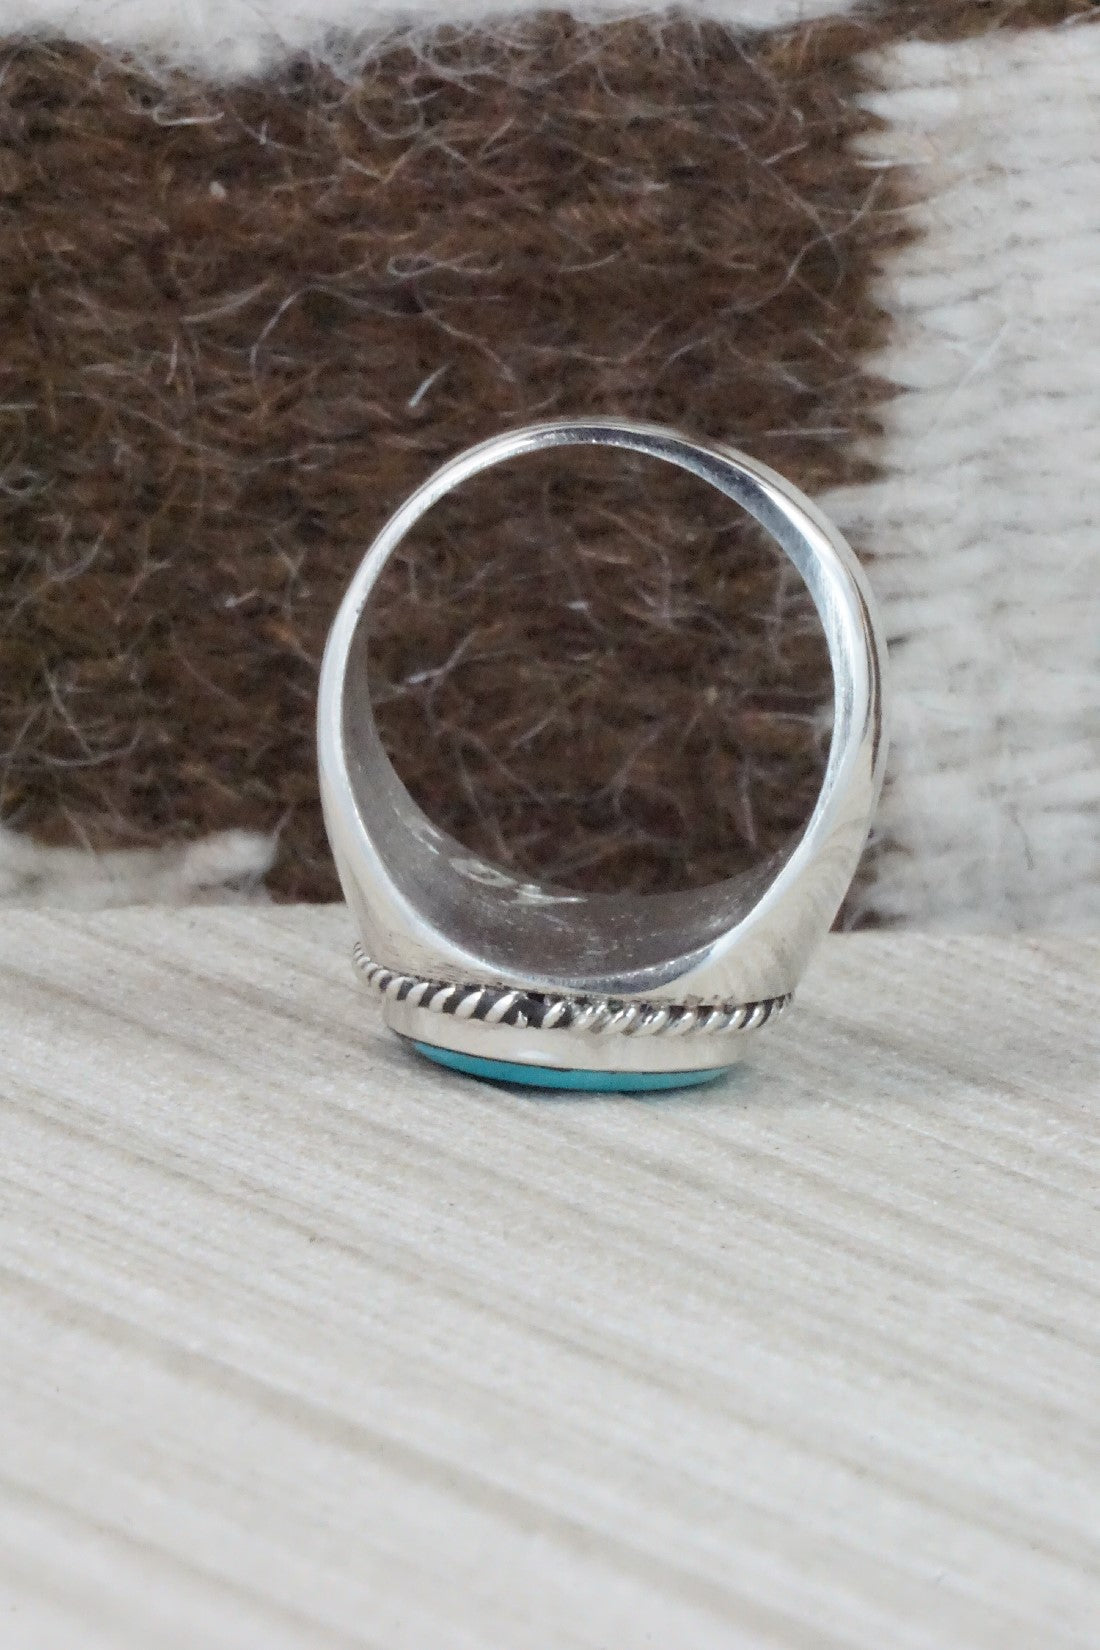 Turquoise & Sterling Silver Ring - Arlen Quetawki Jr. - Size 10.5